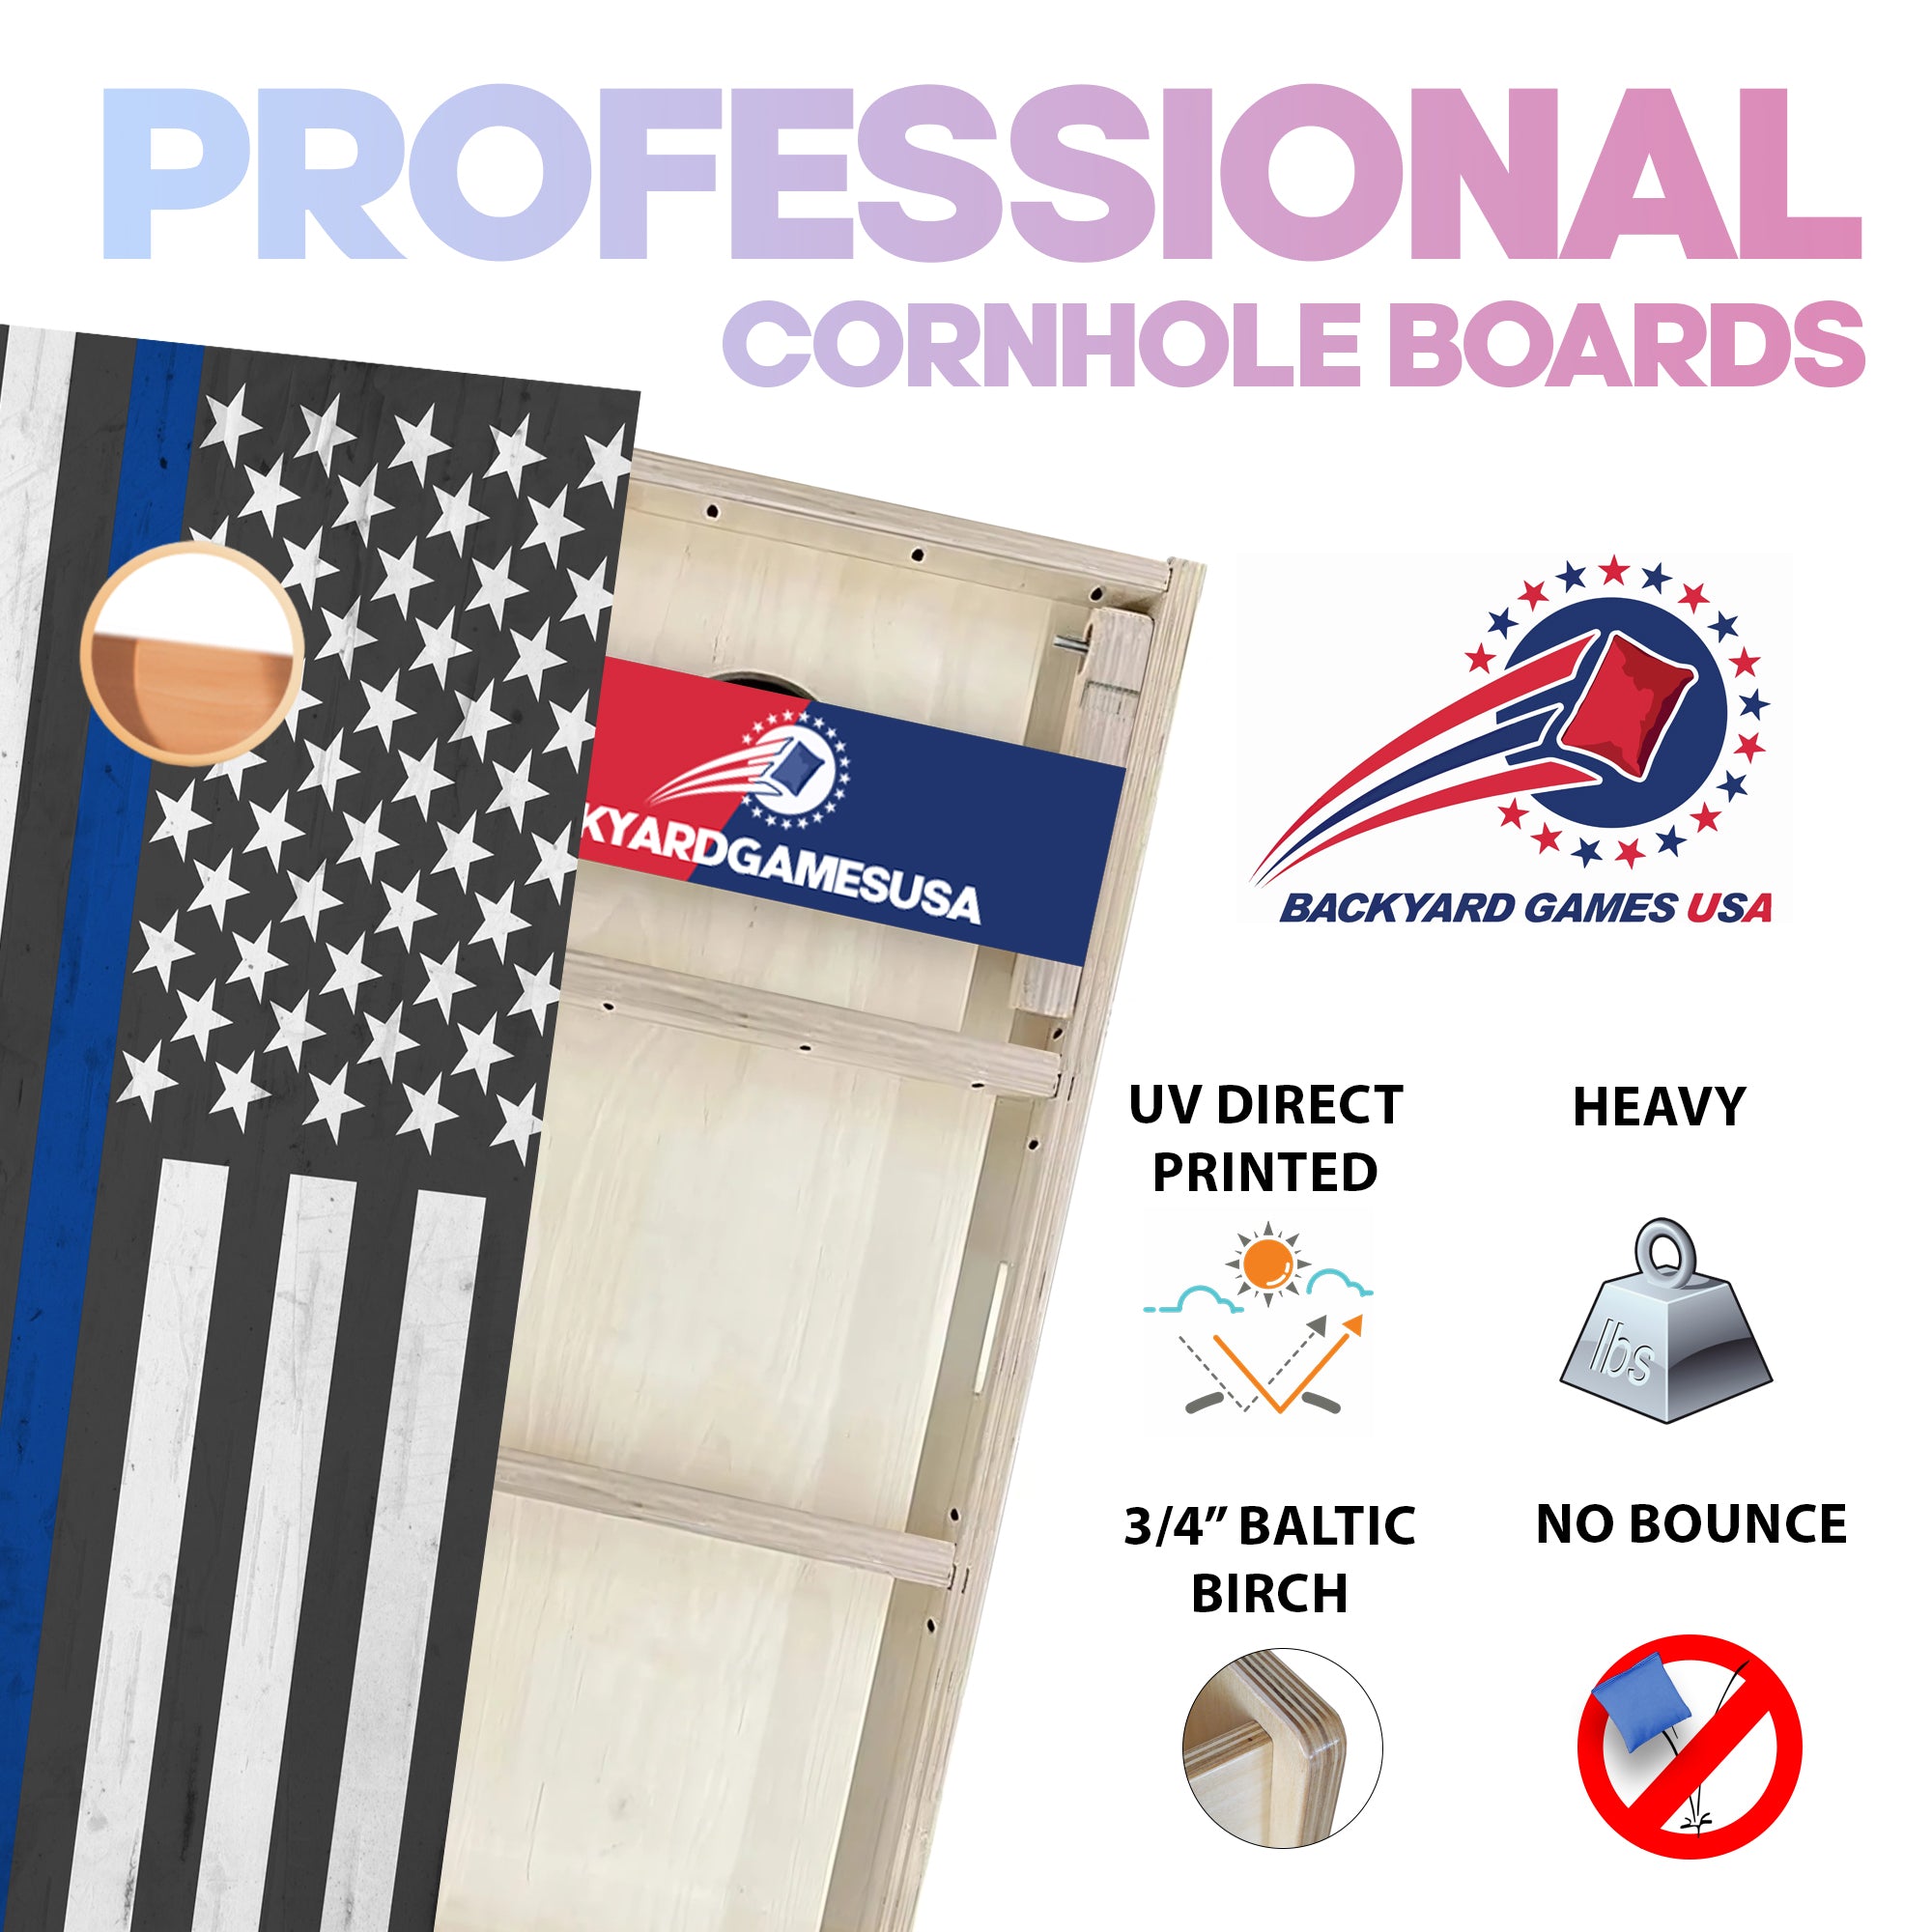 Blue Line Clean Professional Cornhole Boards